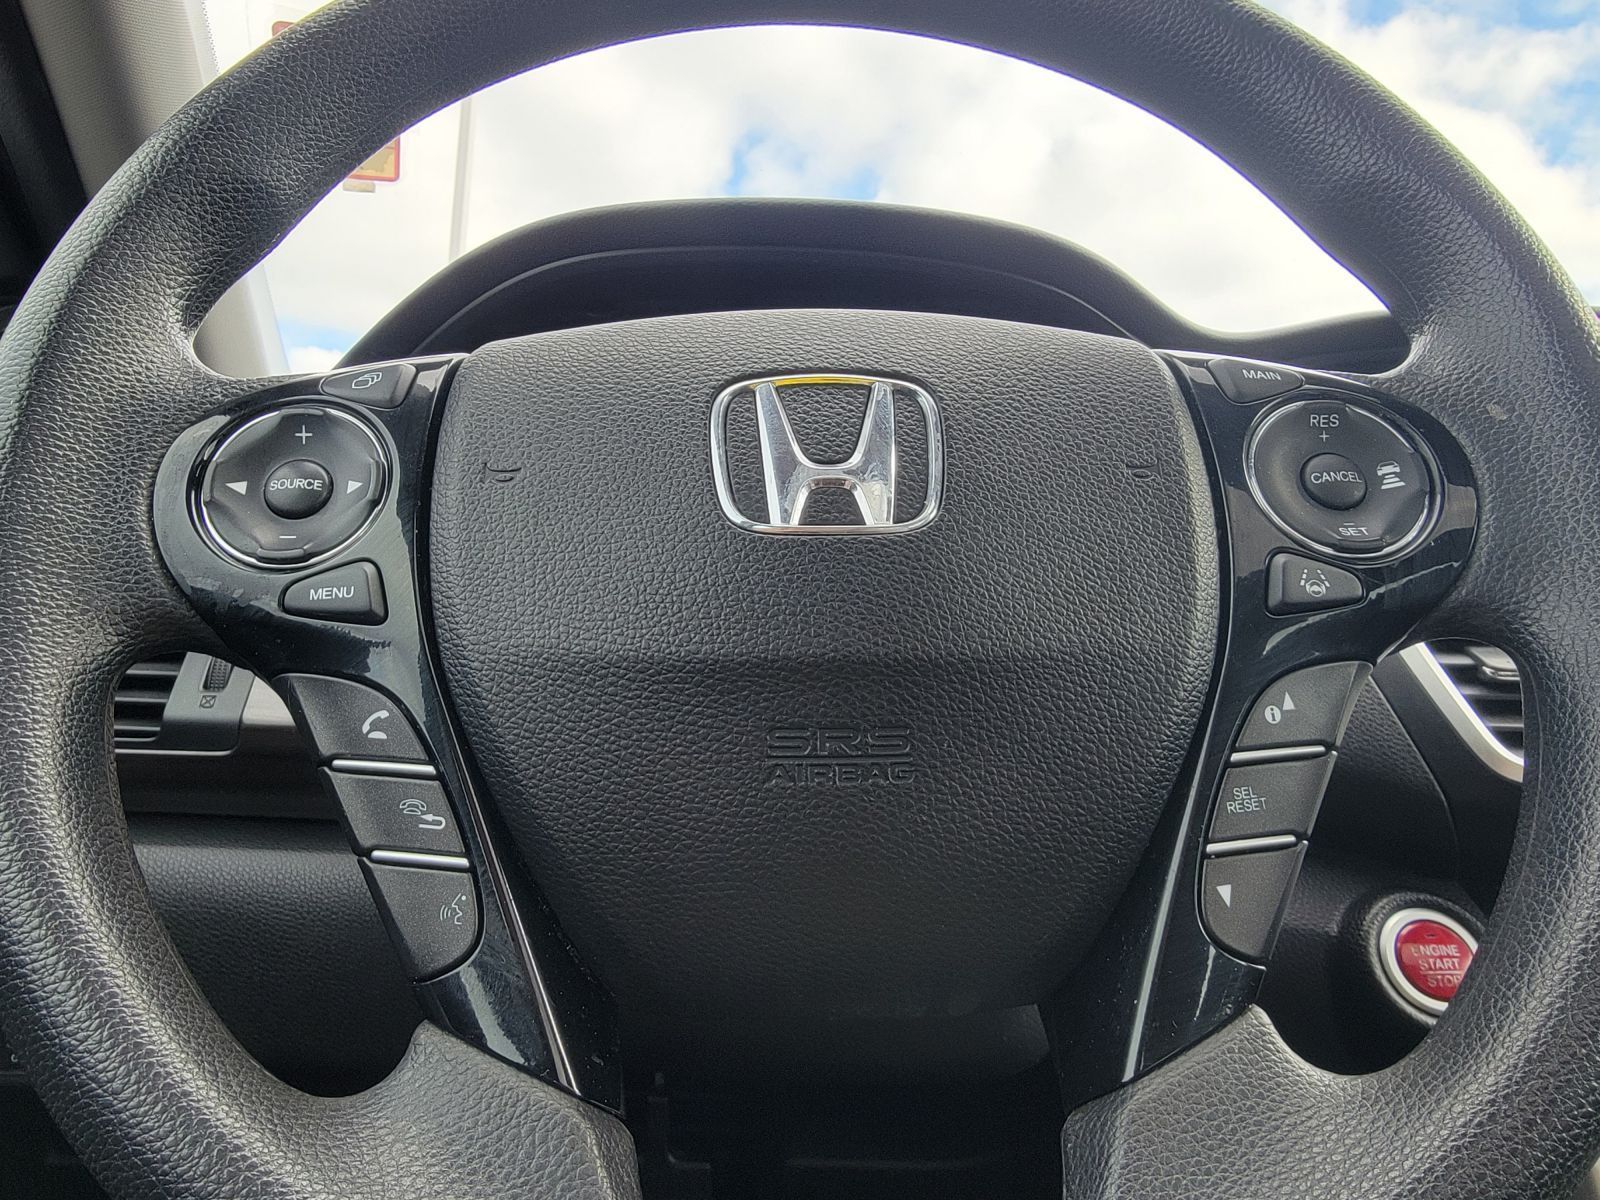 Used, 2016 Honda Accord 4dr I4 CVT EX w/Honda Sensing, Black, 13954A-18